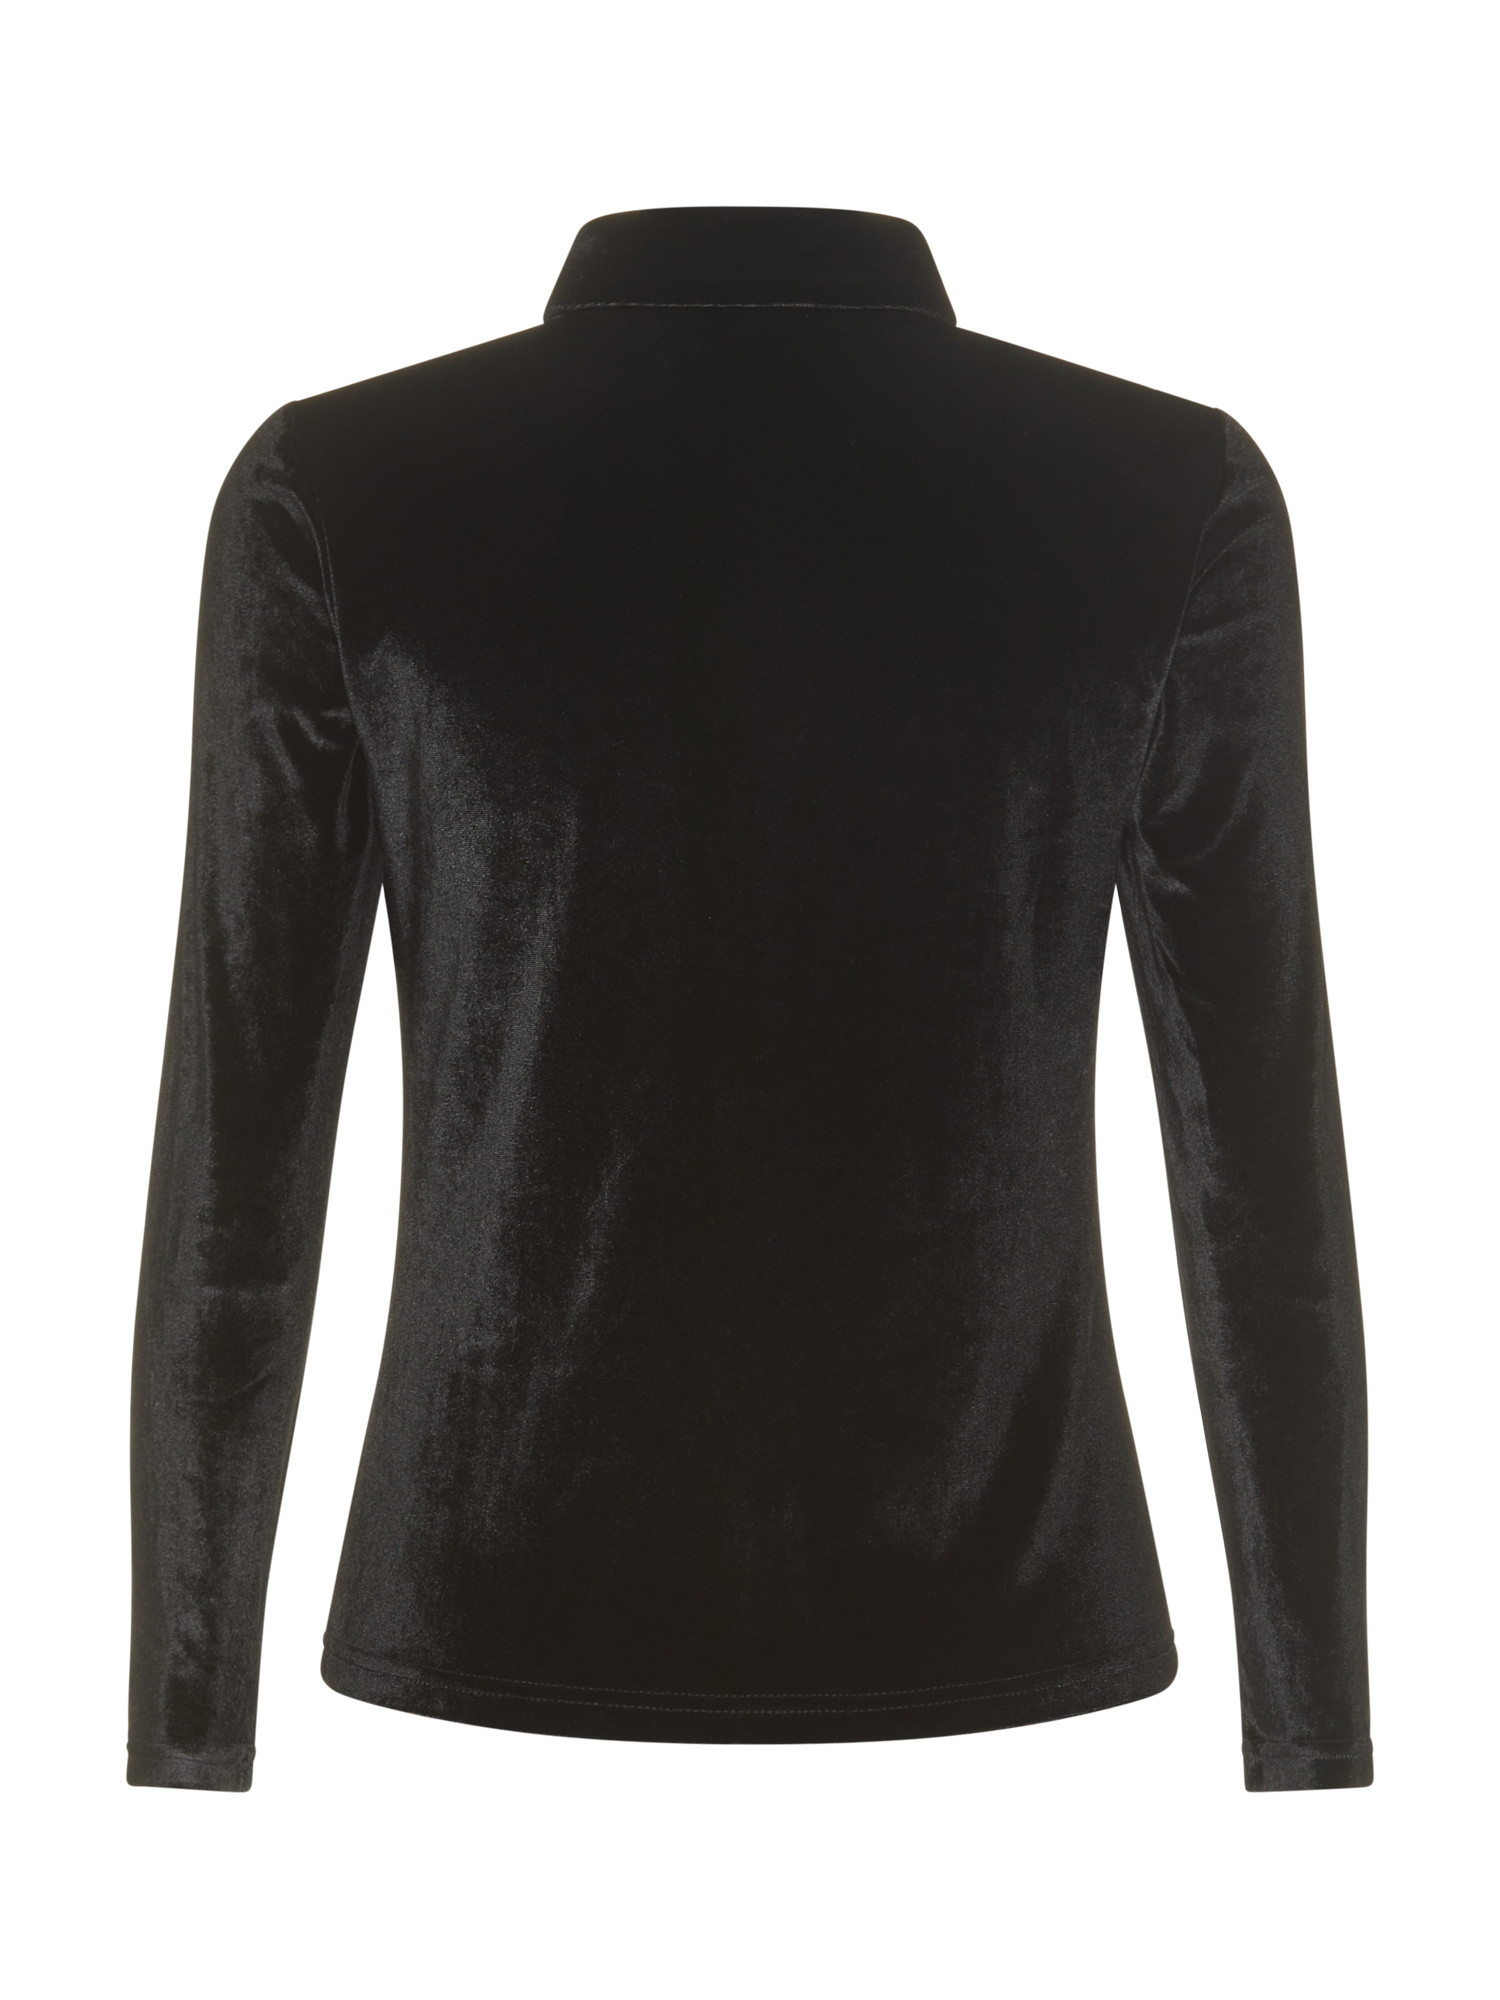 Koan - Stretch velvet shirt with gathering, Black, large image number 1